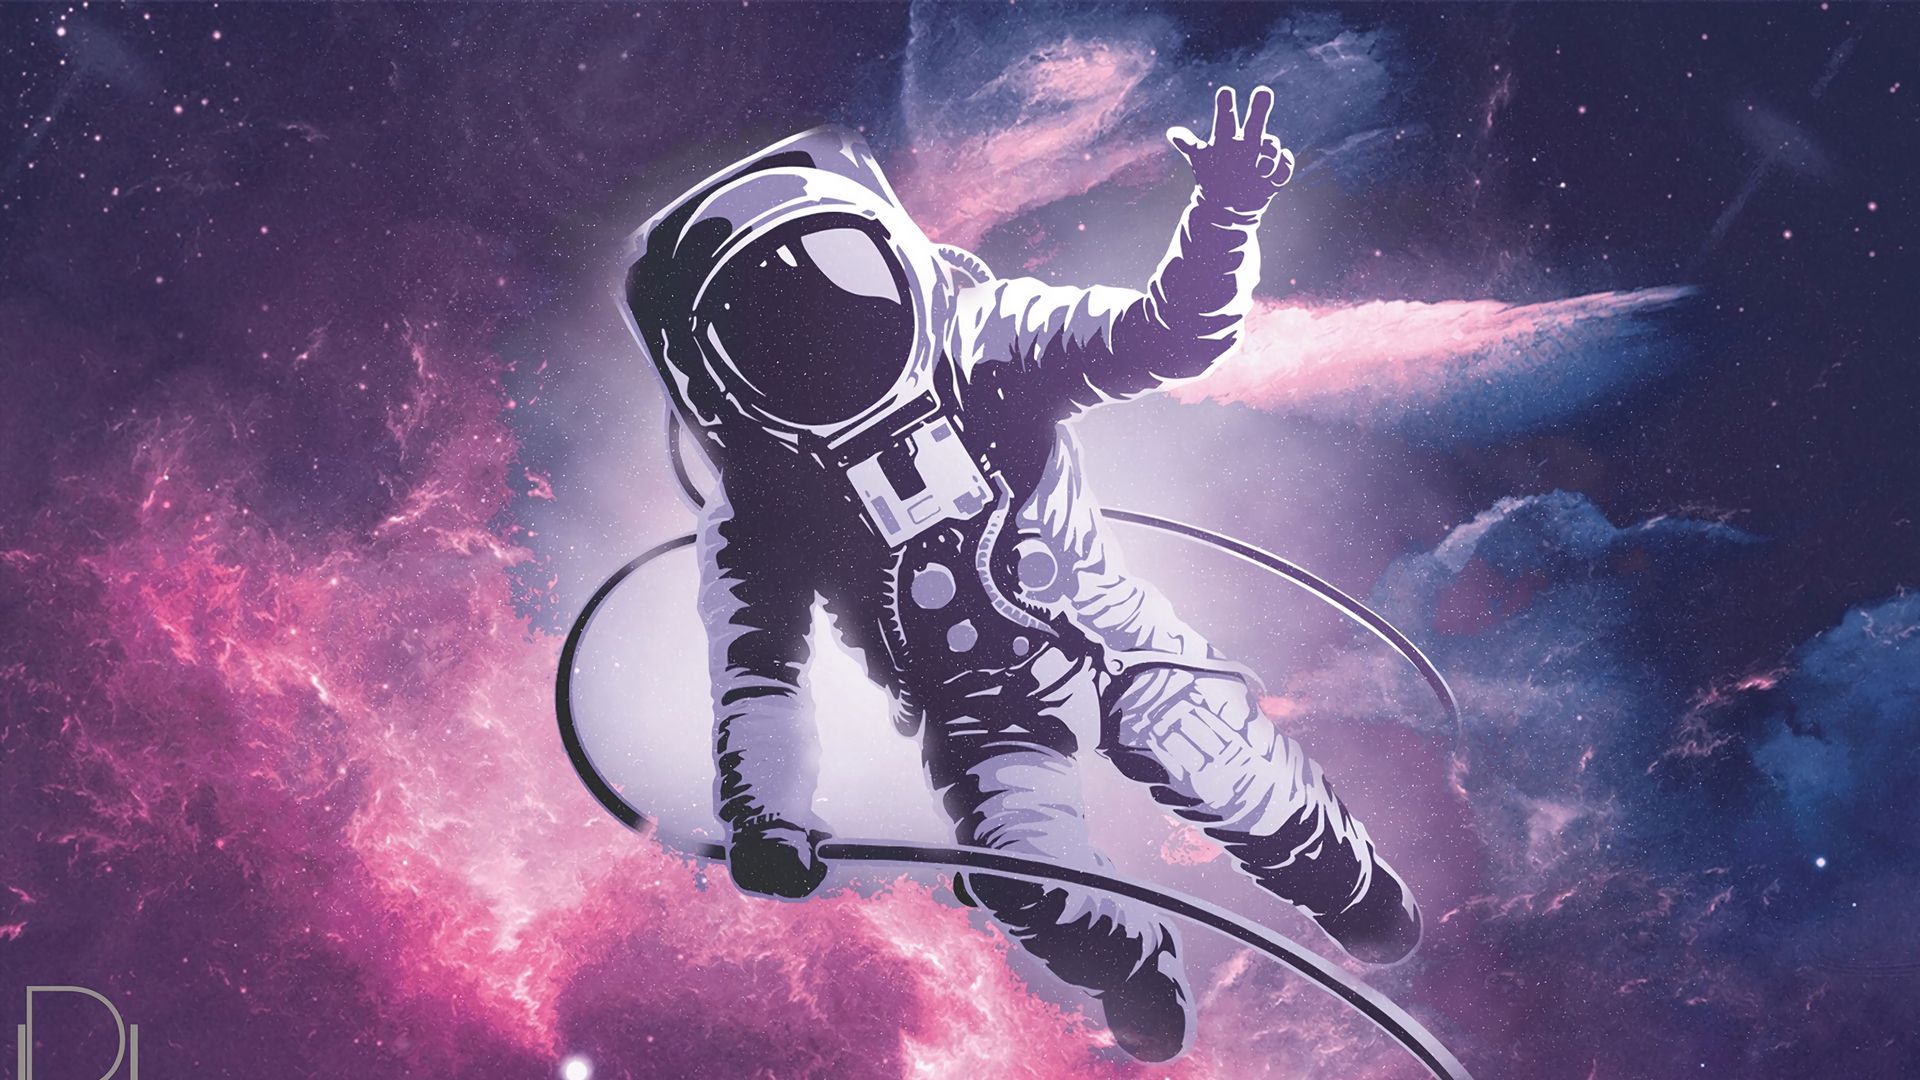 Download wallpaper 1920x1080 astronaut spacesuit space art full 1920x1080